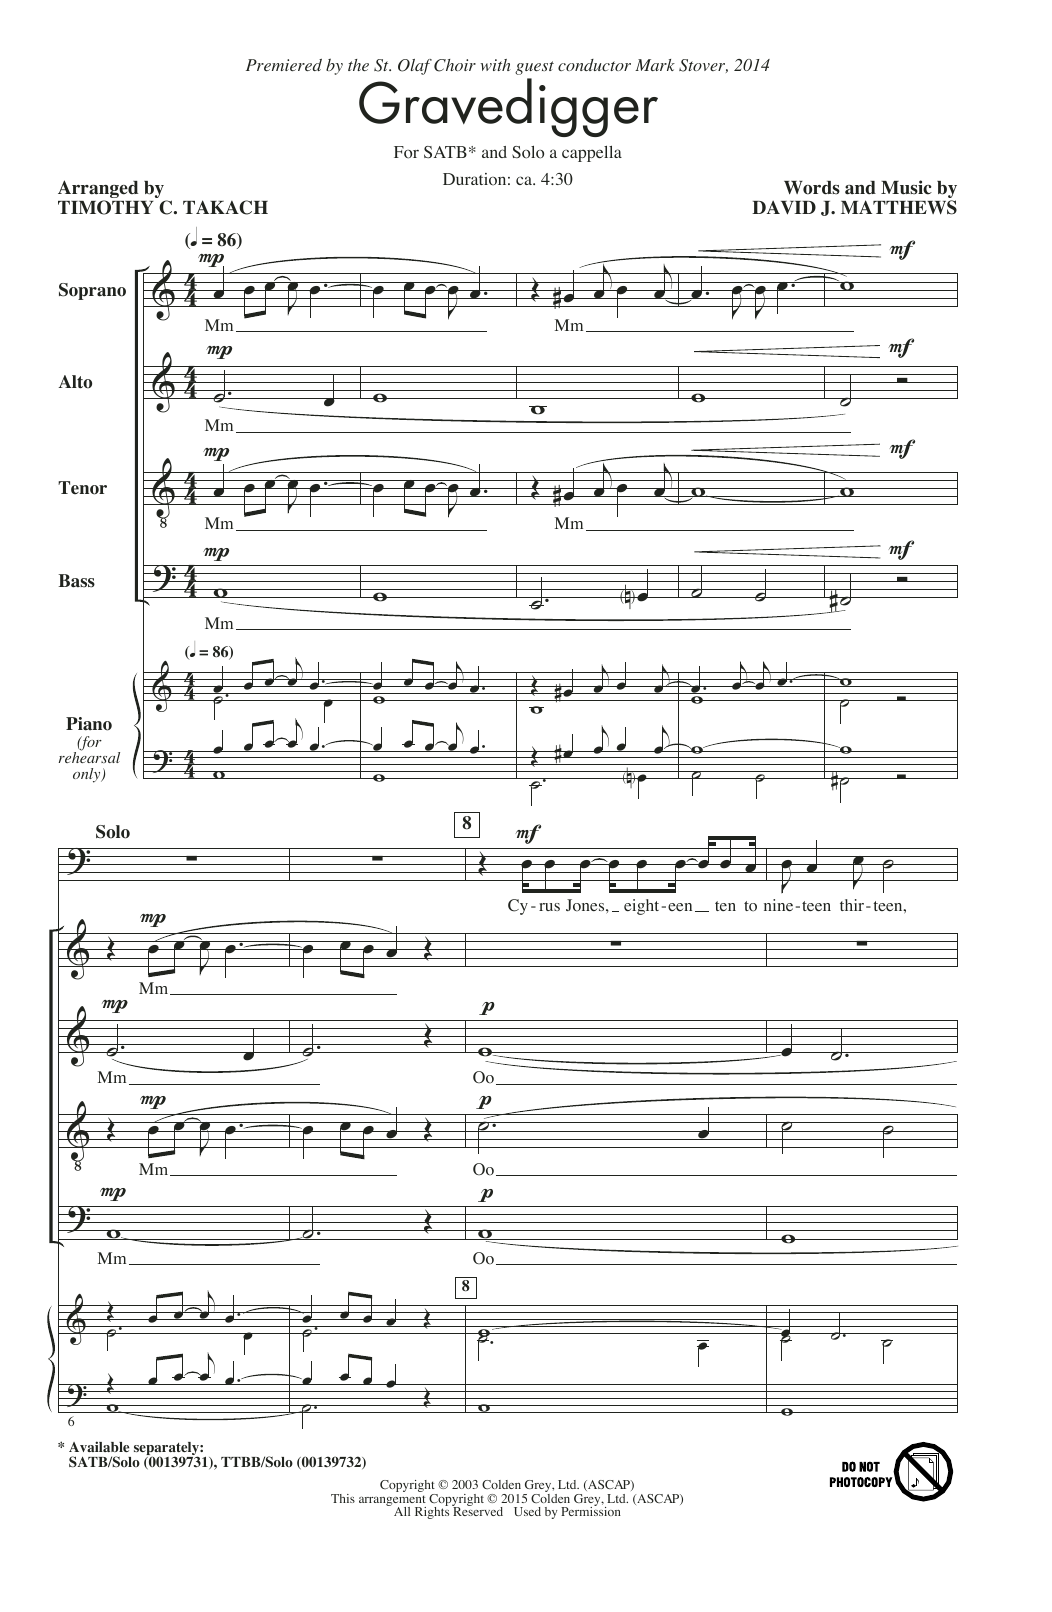 Dave Matthews Gravedigger (arr. Timothy C. Takach) Sheet Music Notes & Chords for TTBB - Download or Print PDF